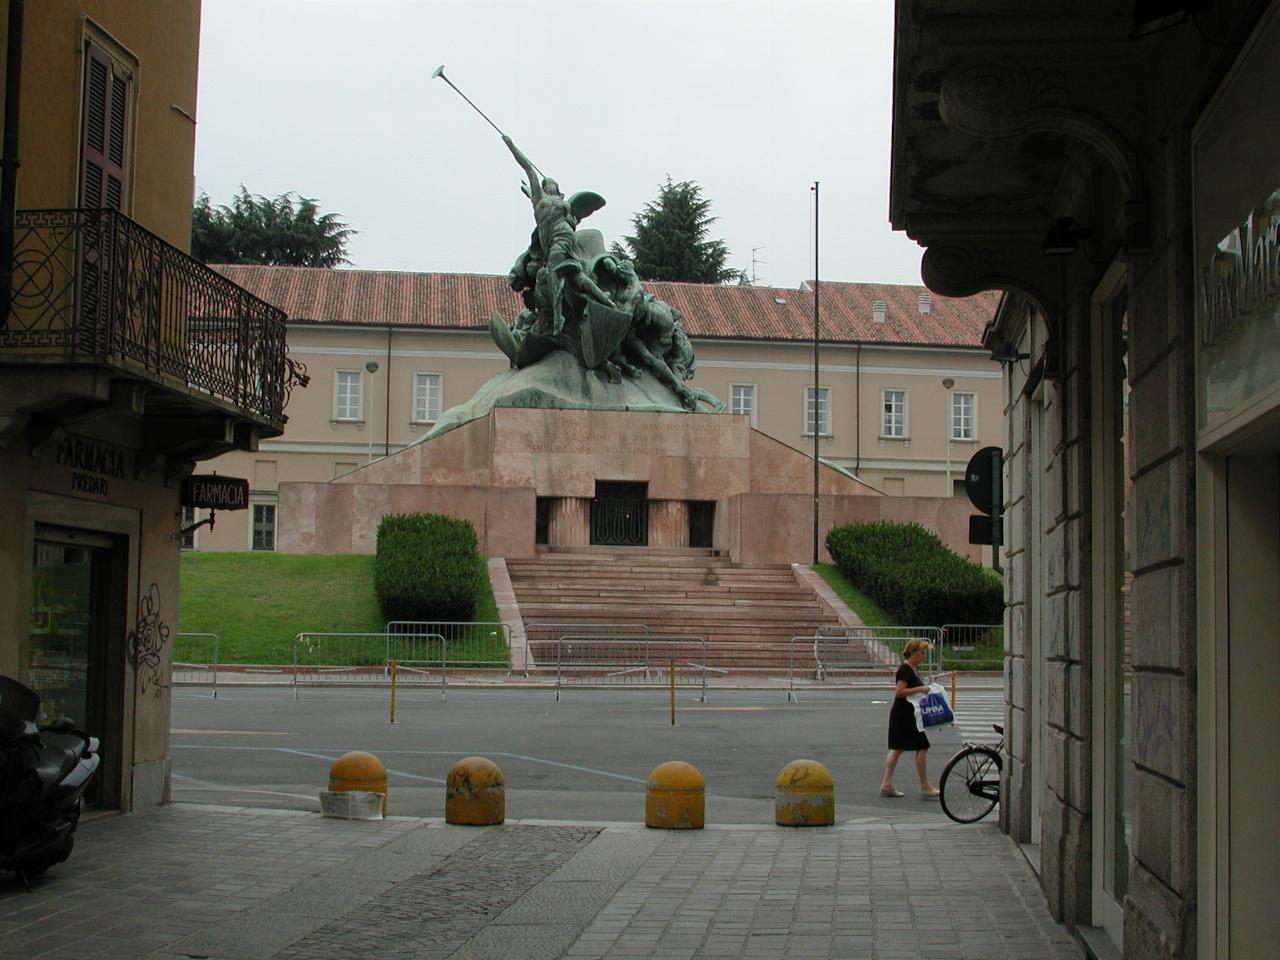 Statue in central Monza